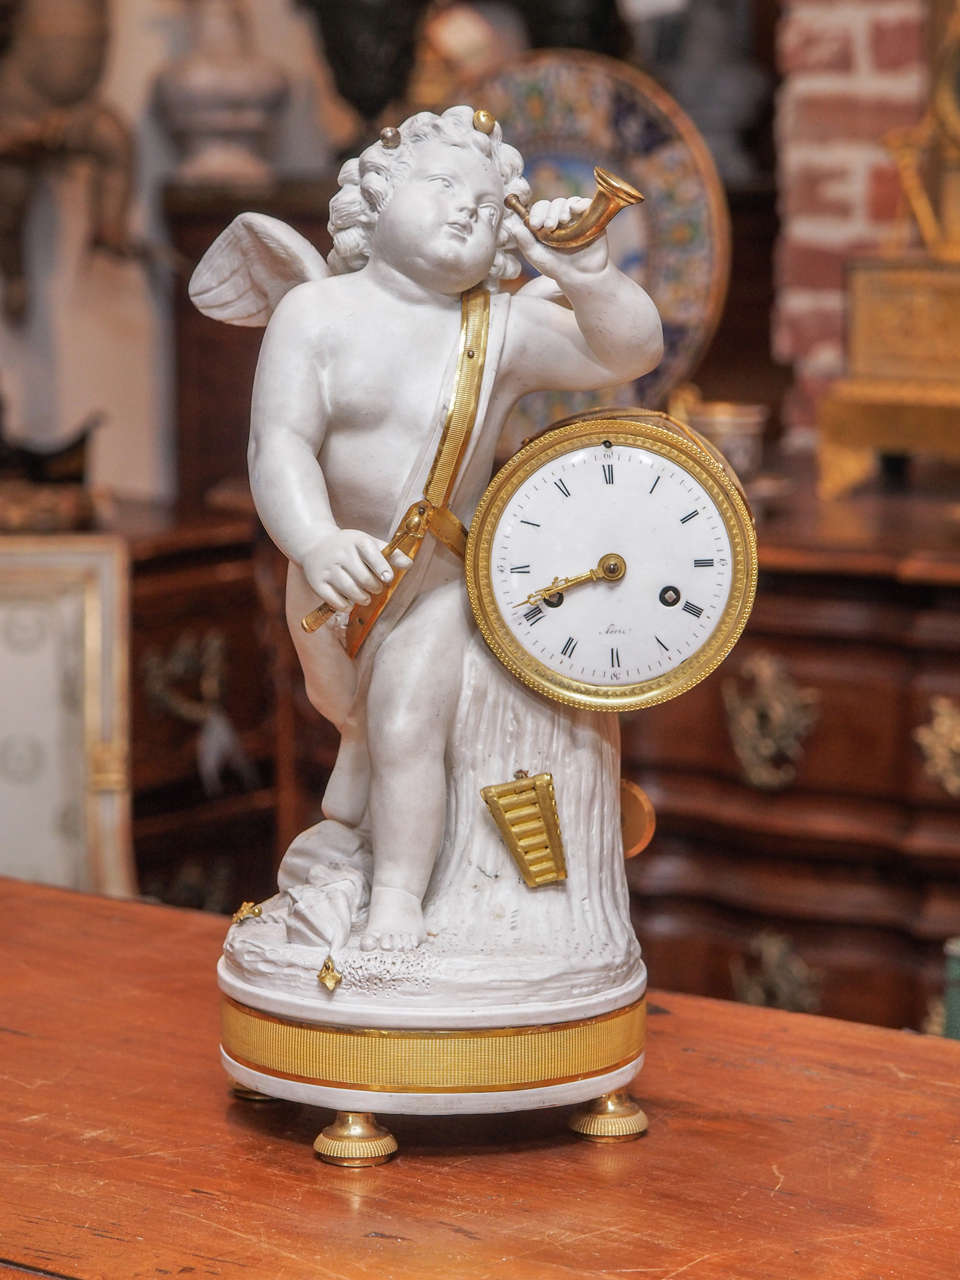 19th century figural bisque porcelain and bronze dore' clock.